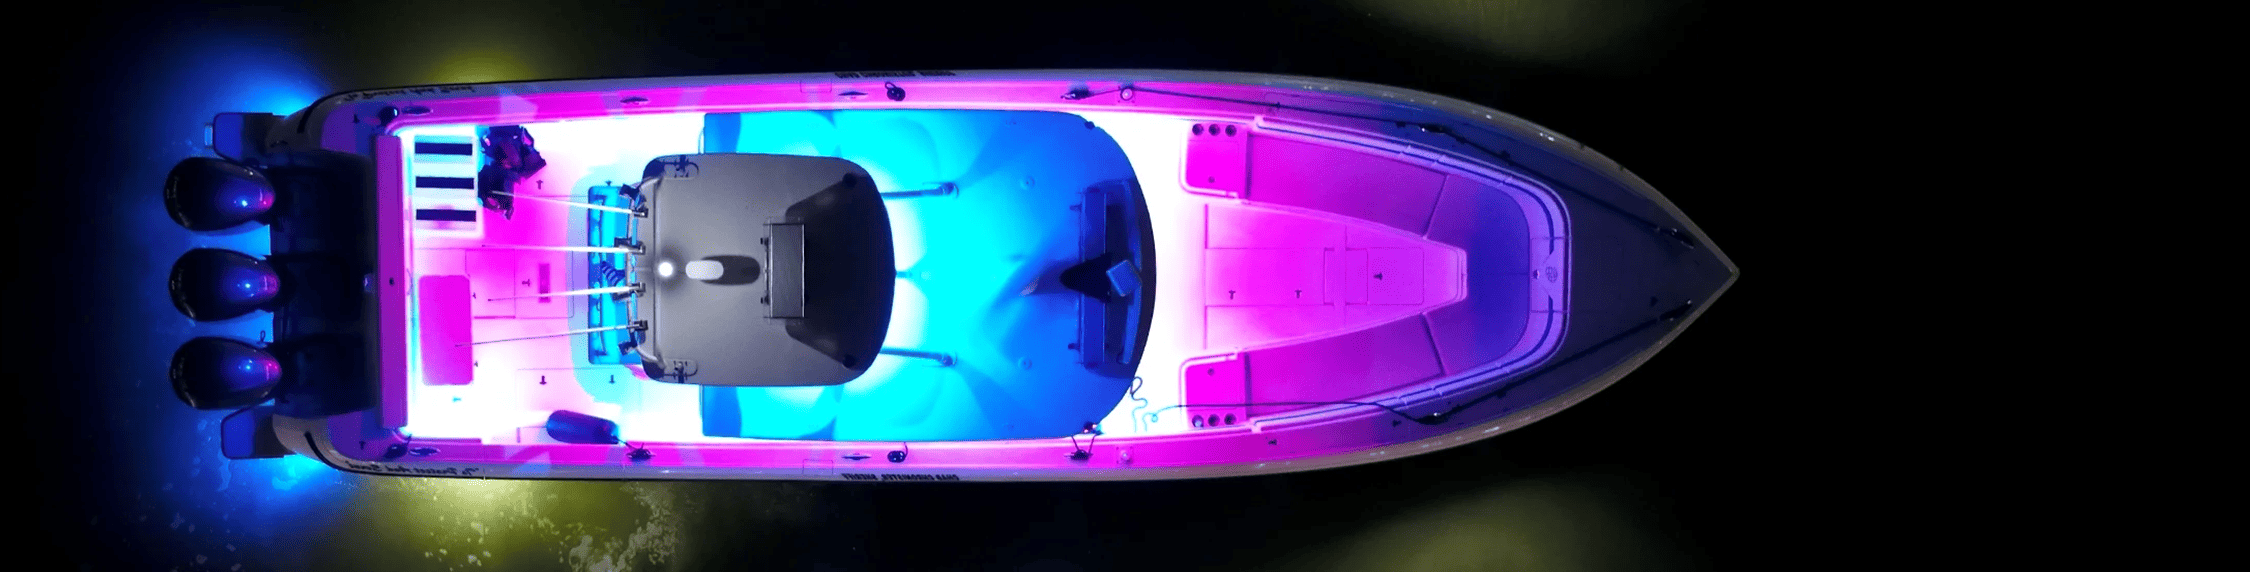 Marine Lights - Lighting Systems for Yachts - Underwater Marine Lights